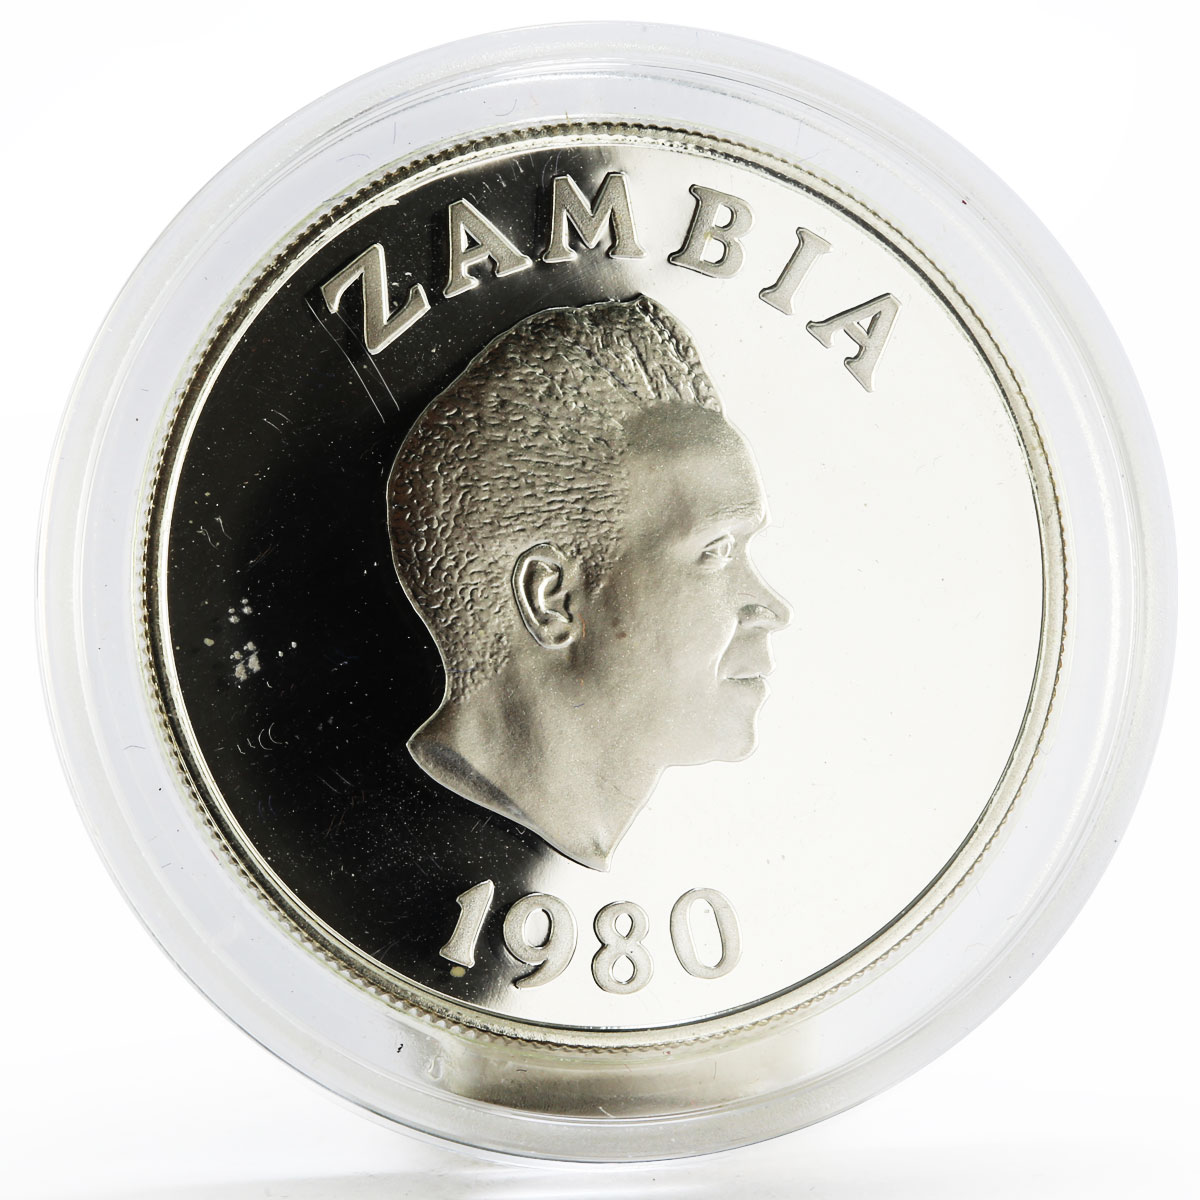 Zambia 10 kwacha International Year of the Child proof silver coin 1980